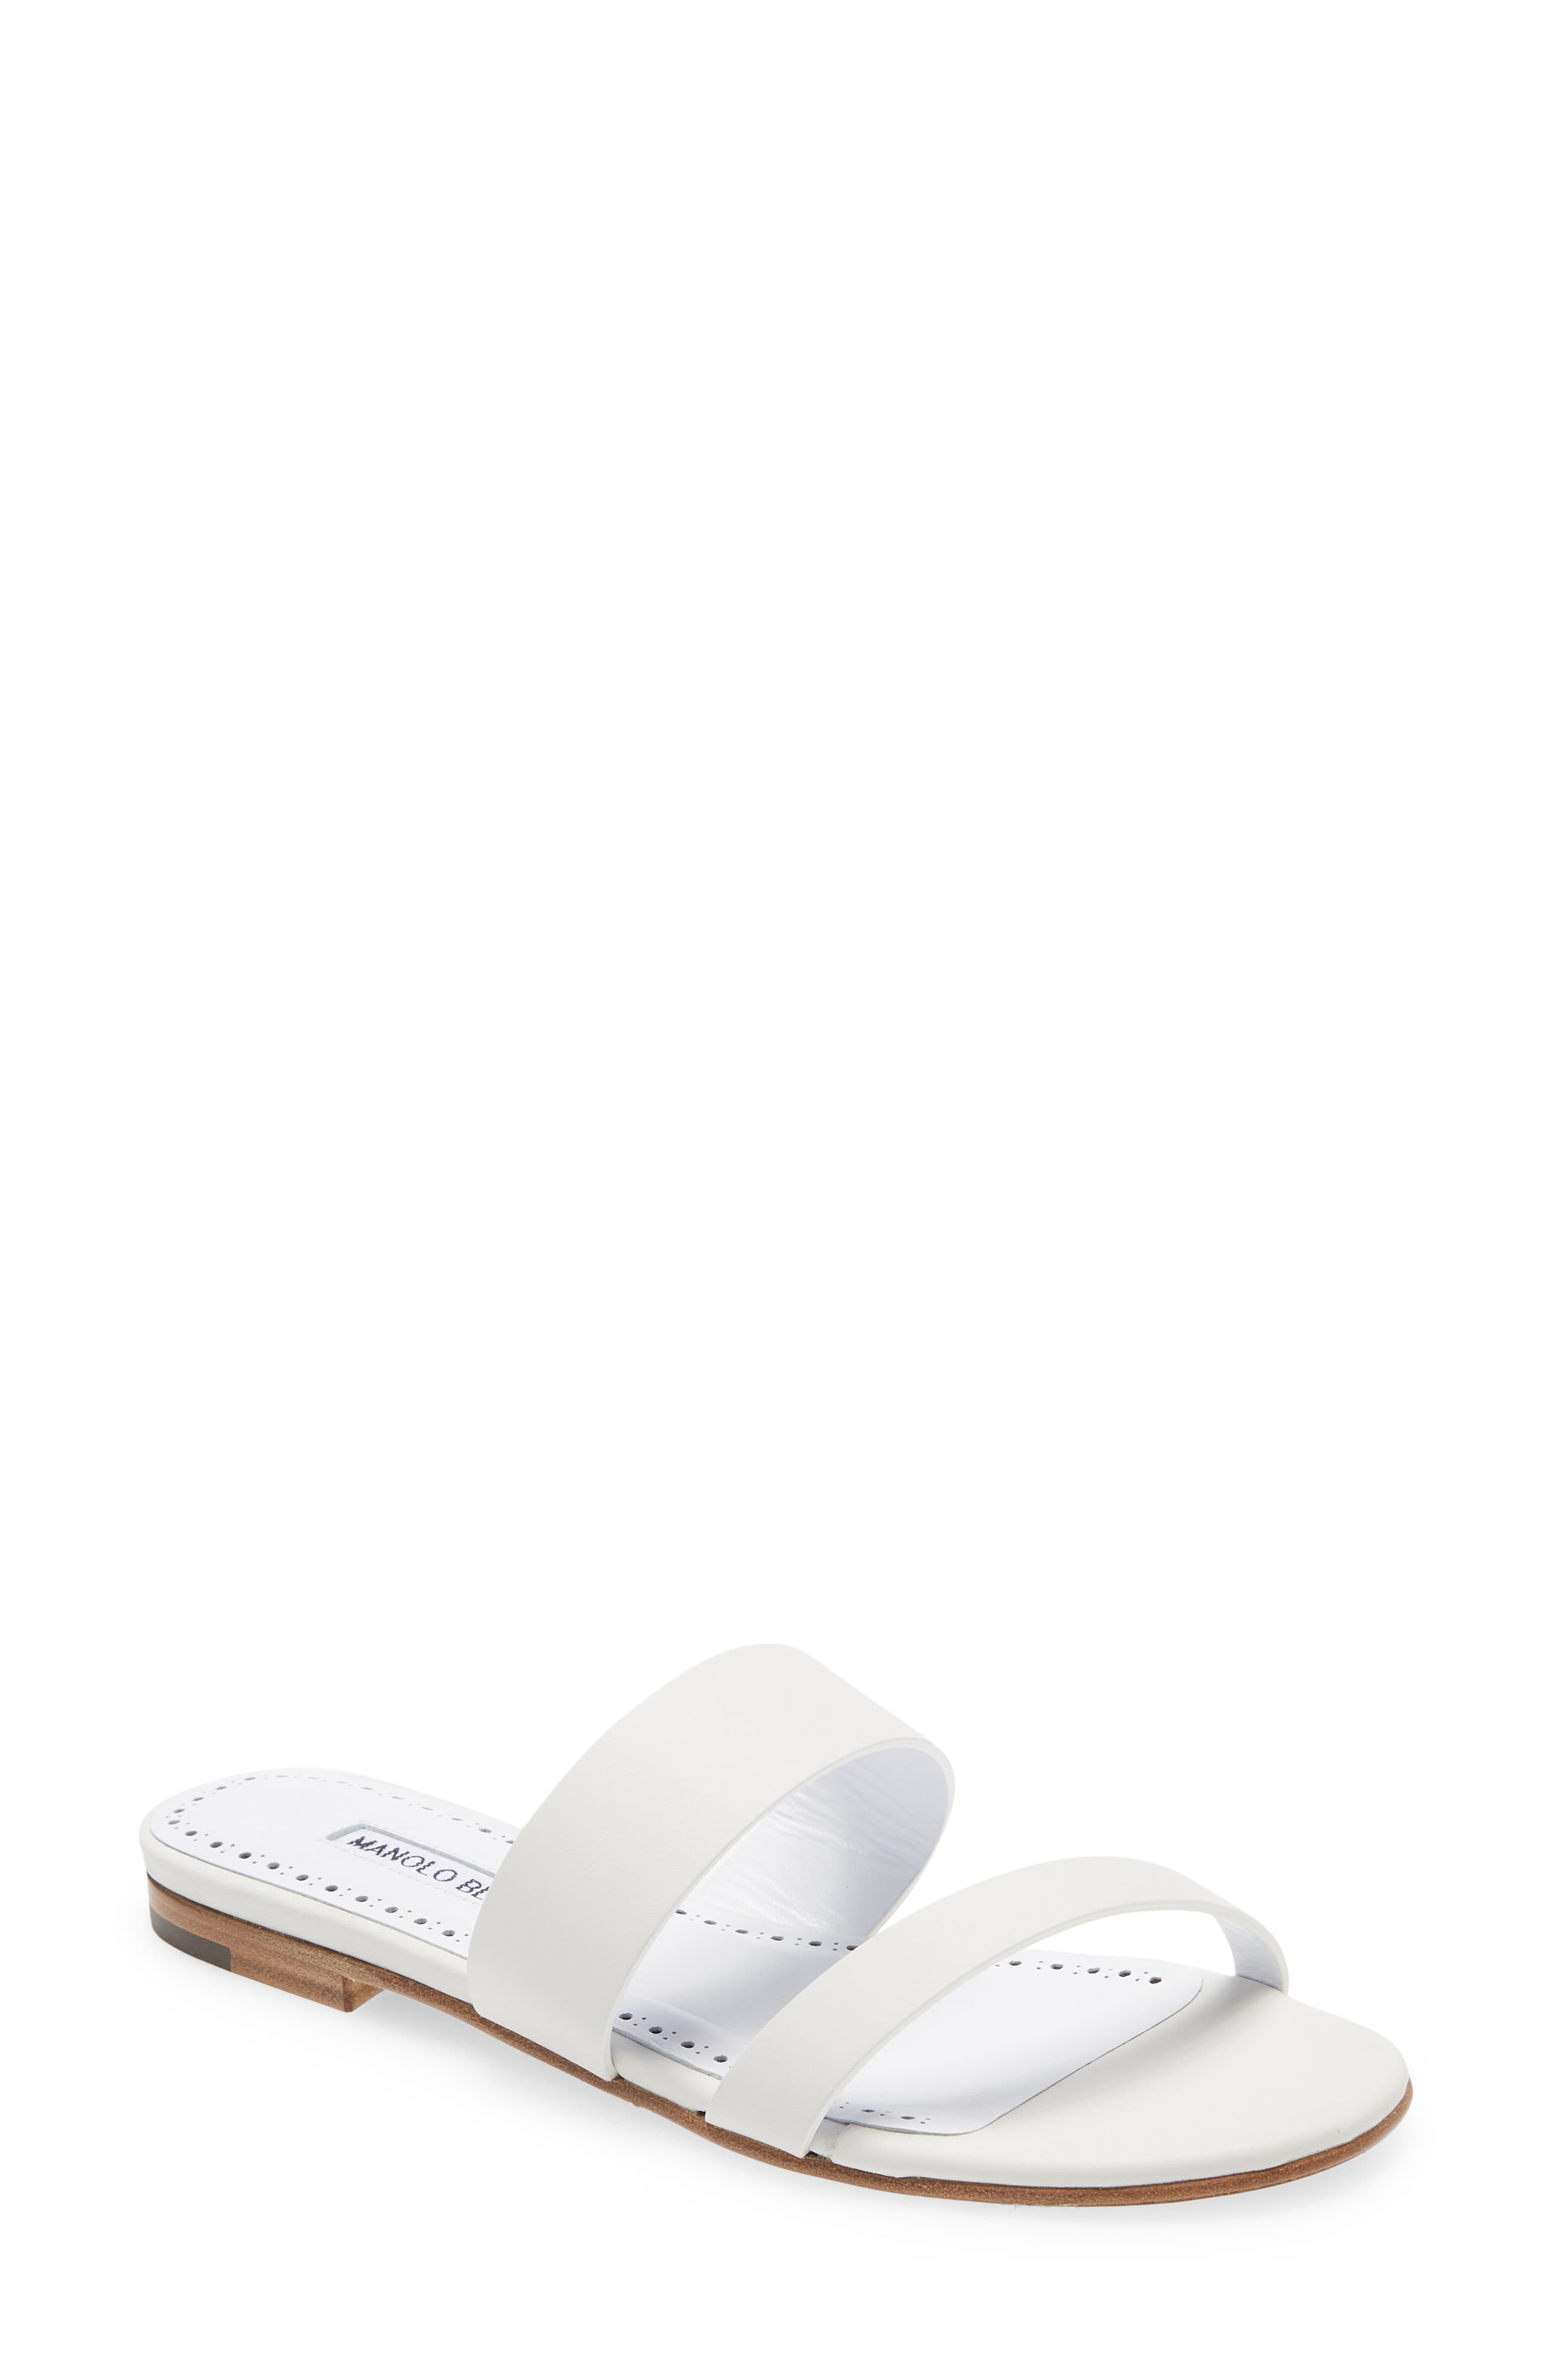 Manolo Blahnik Serrato Slide Sandal in White at Nordstrom, Size 7Us